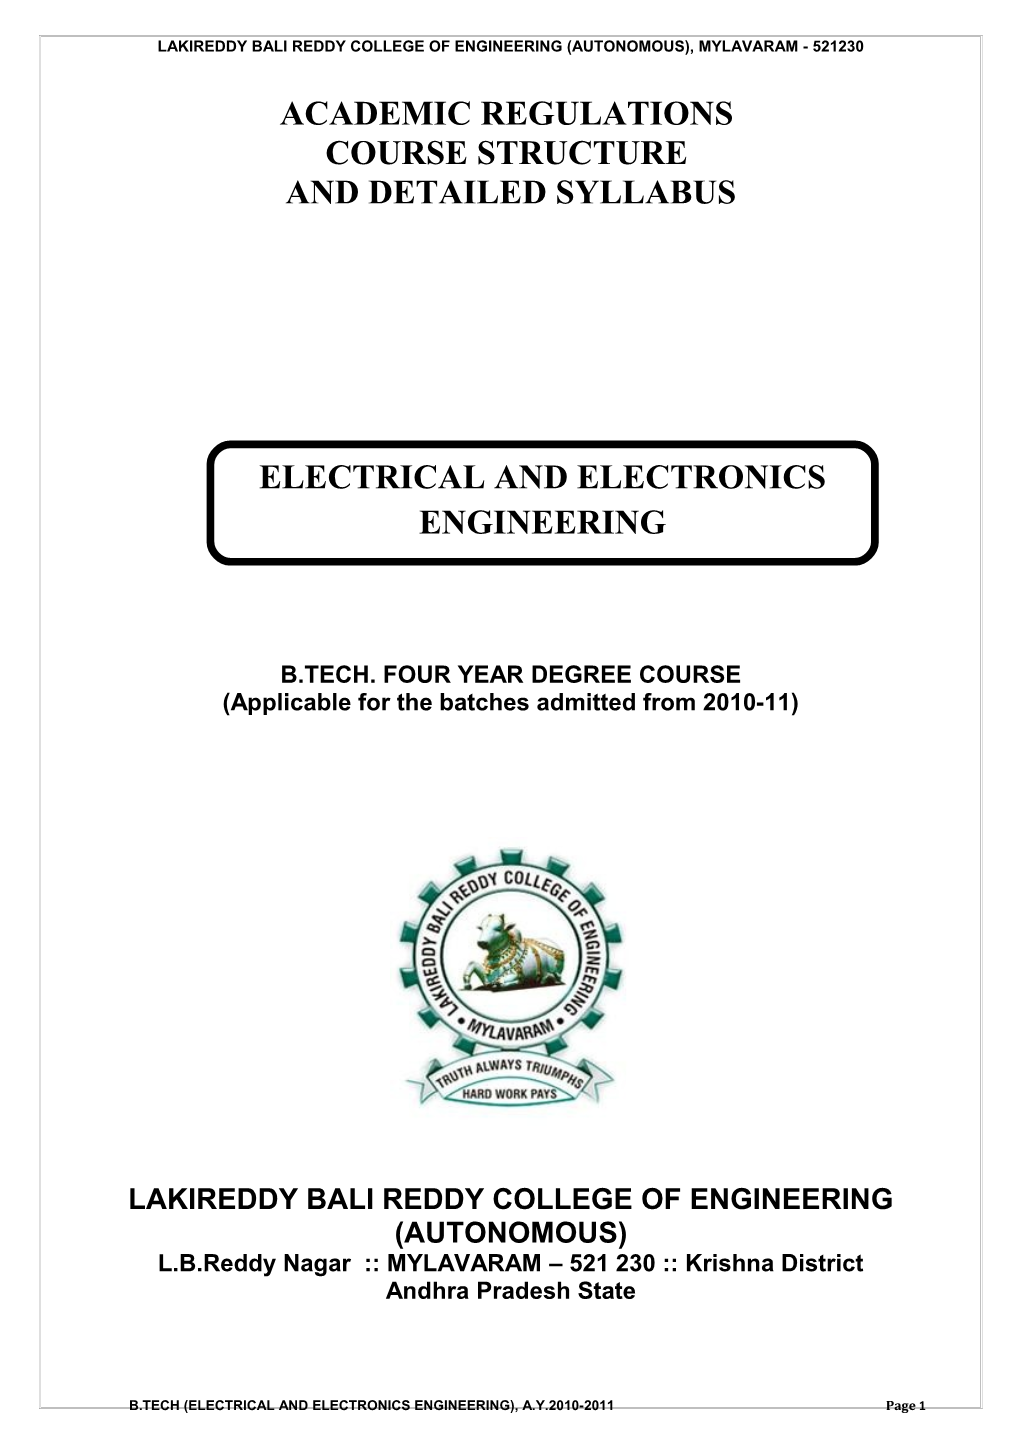 Lakireddy Bali Reddy College of Engineering (Autonomous), Mylavaram - 521230